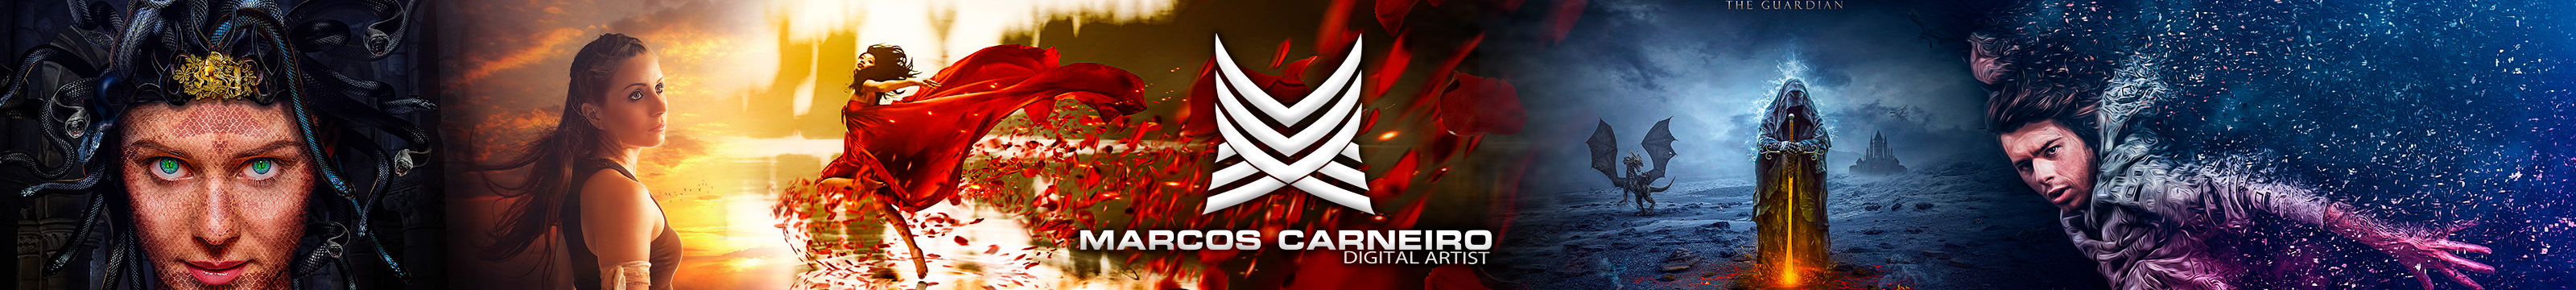 Marcos Carneiro's profile banner